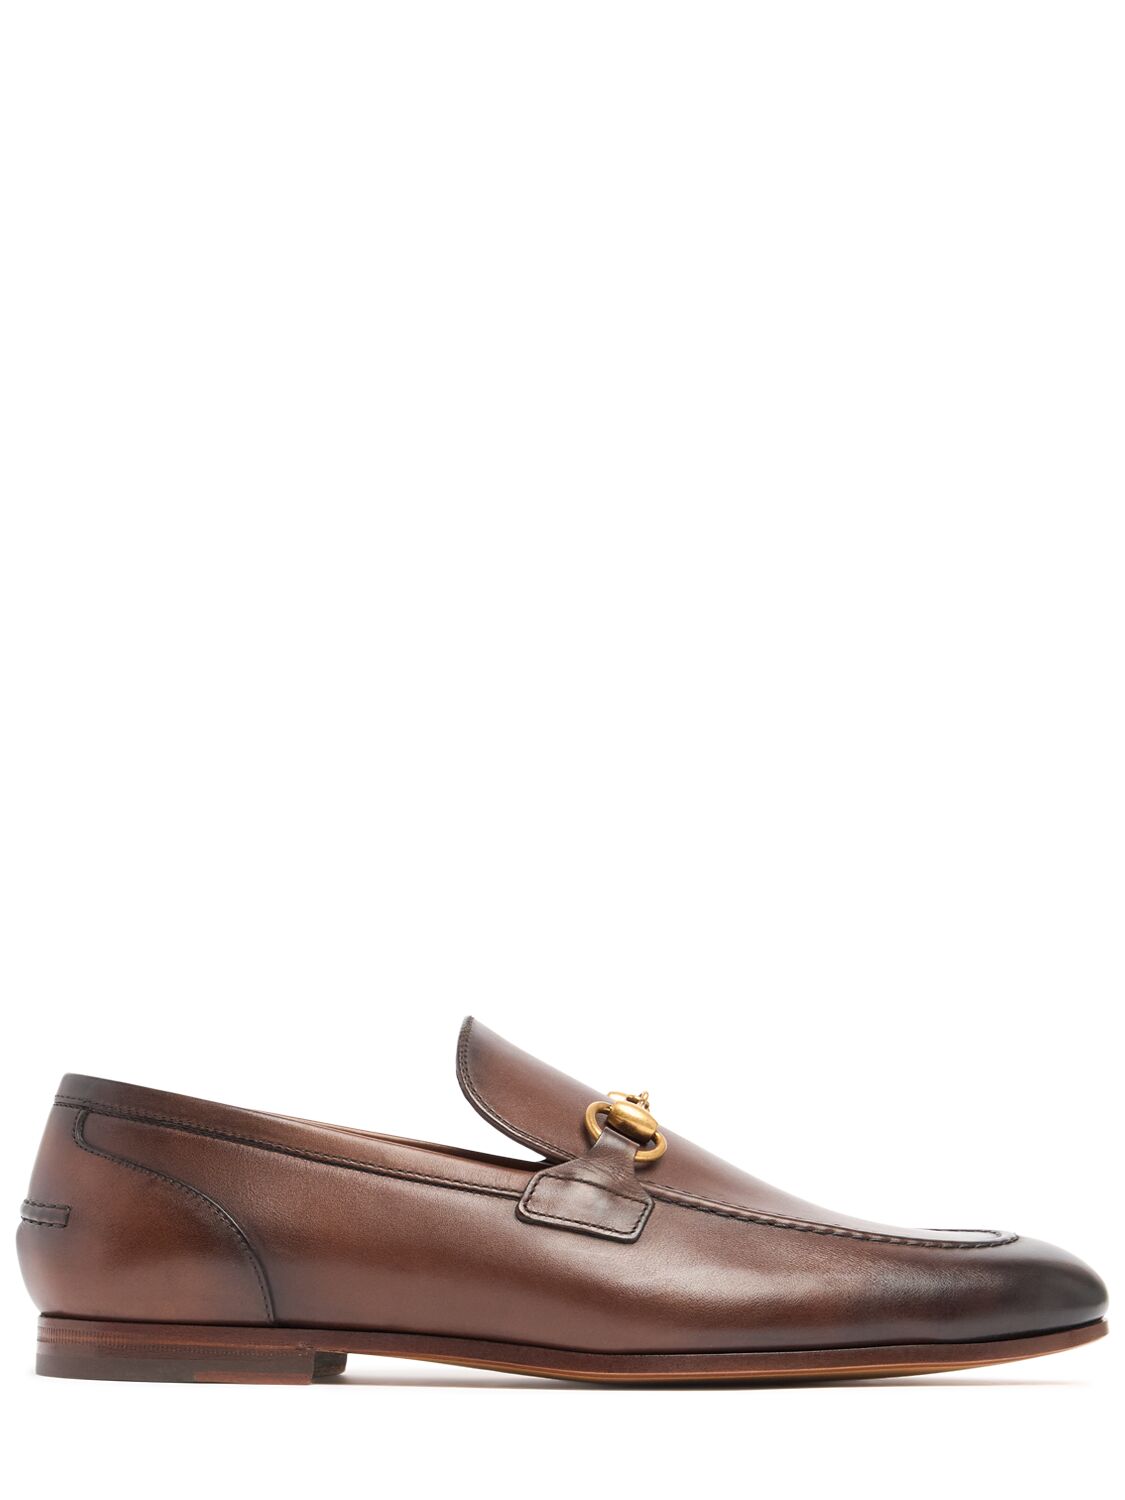 Gucci Jordaan Horsebit Leather Loafers In Fondente